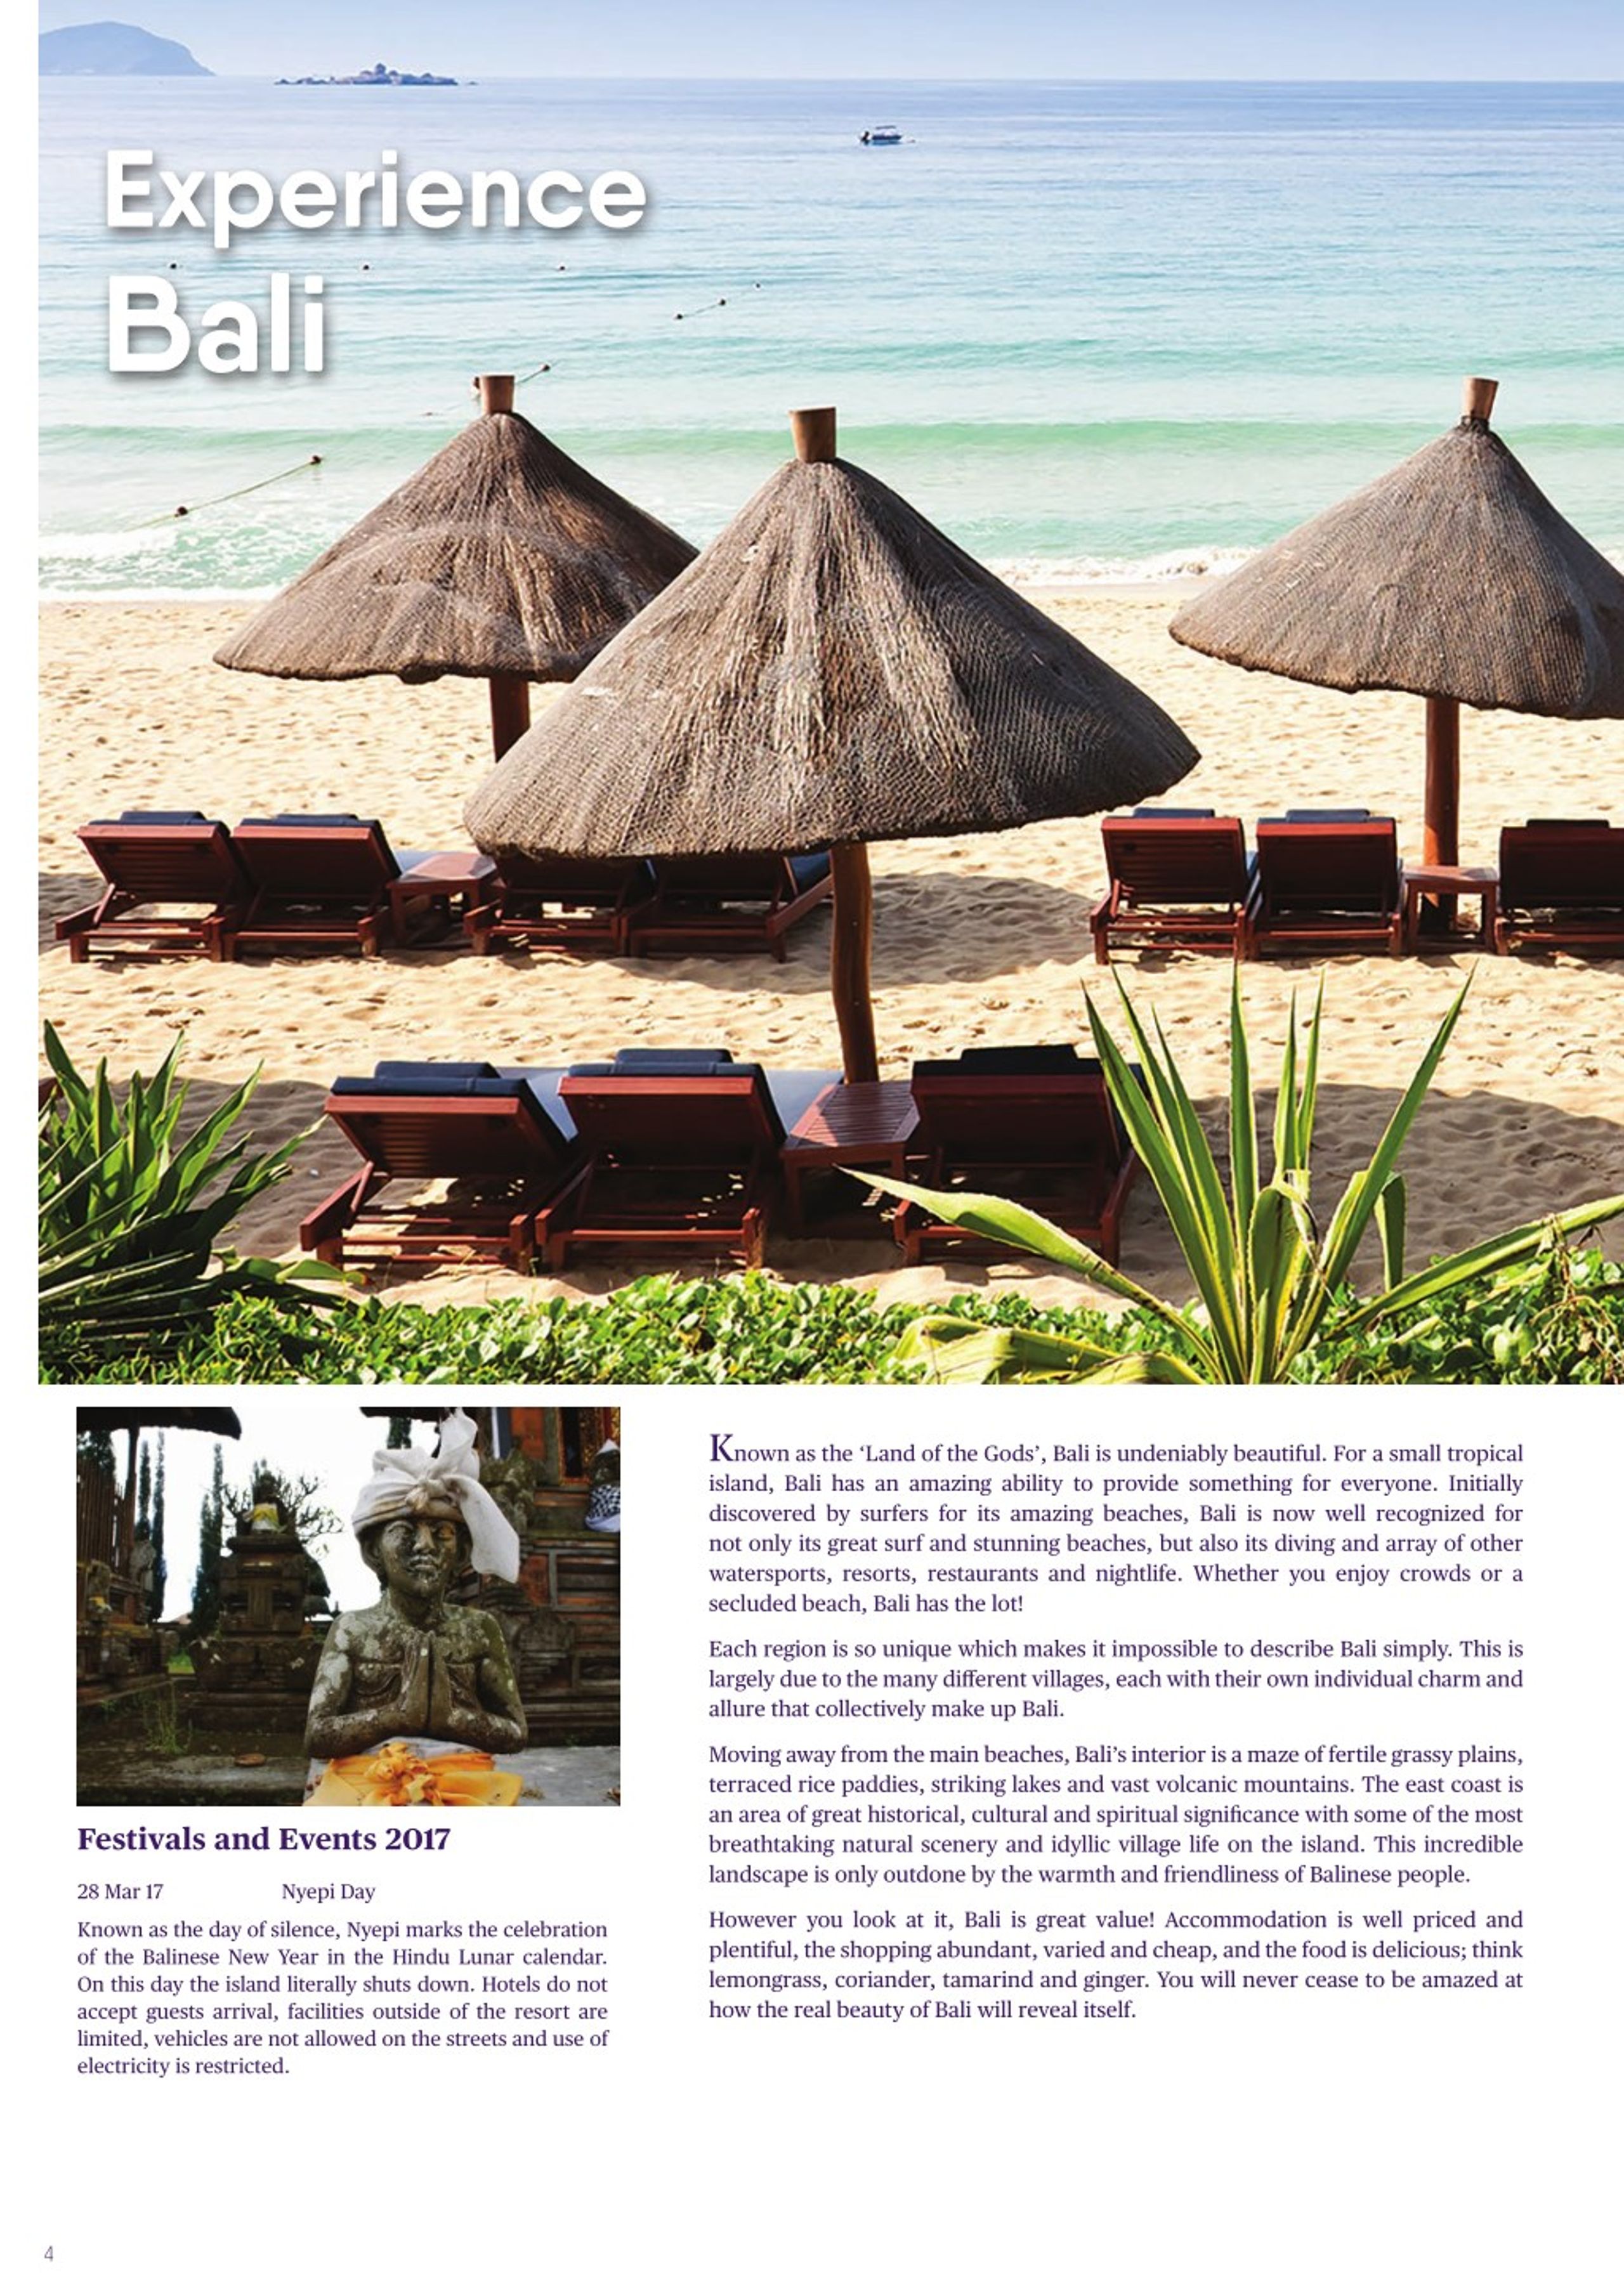 travel brochure for bali